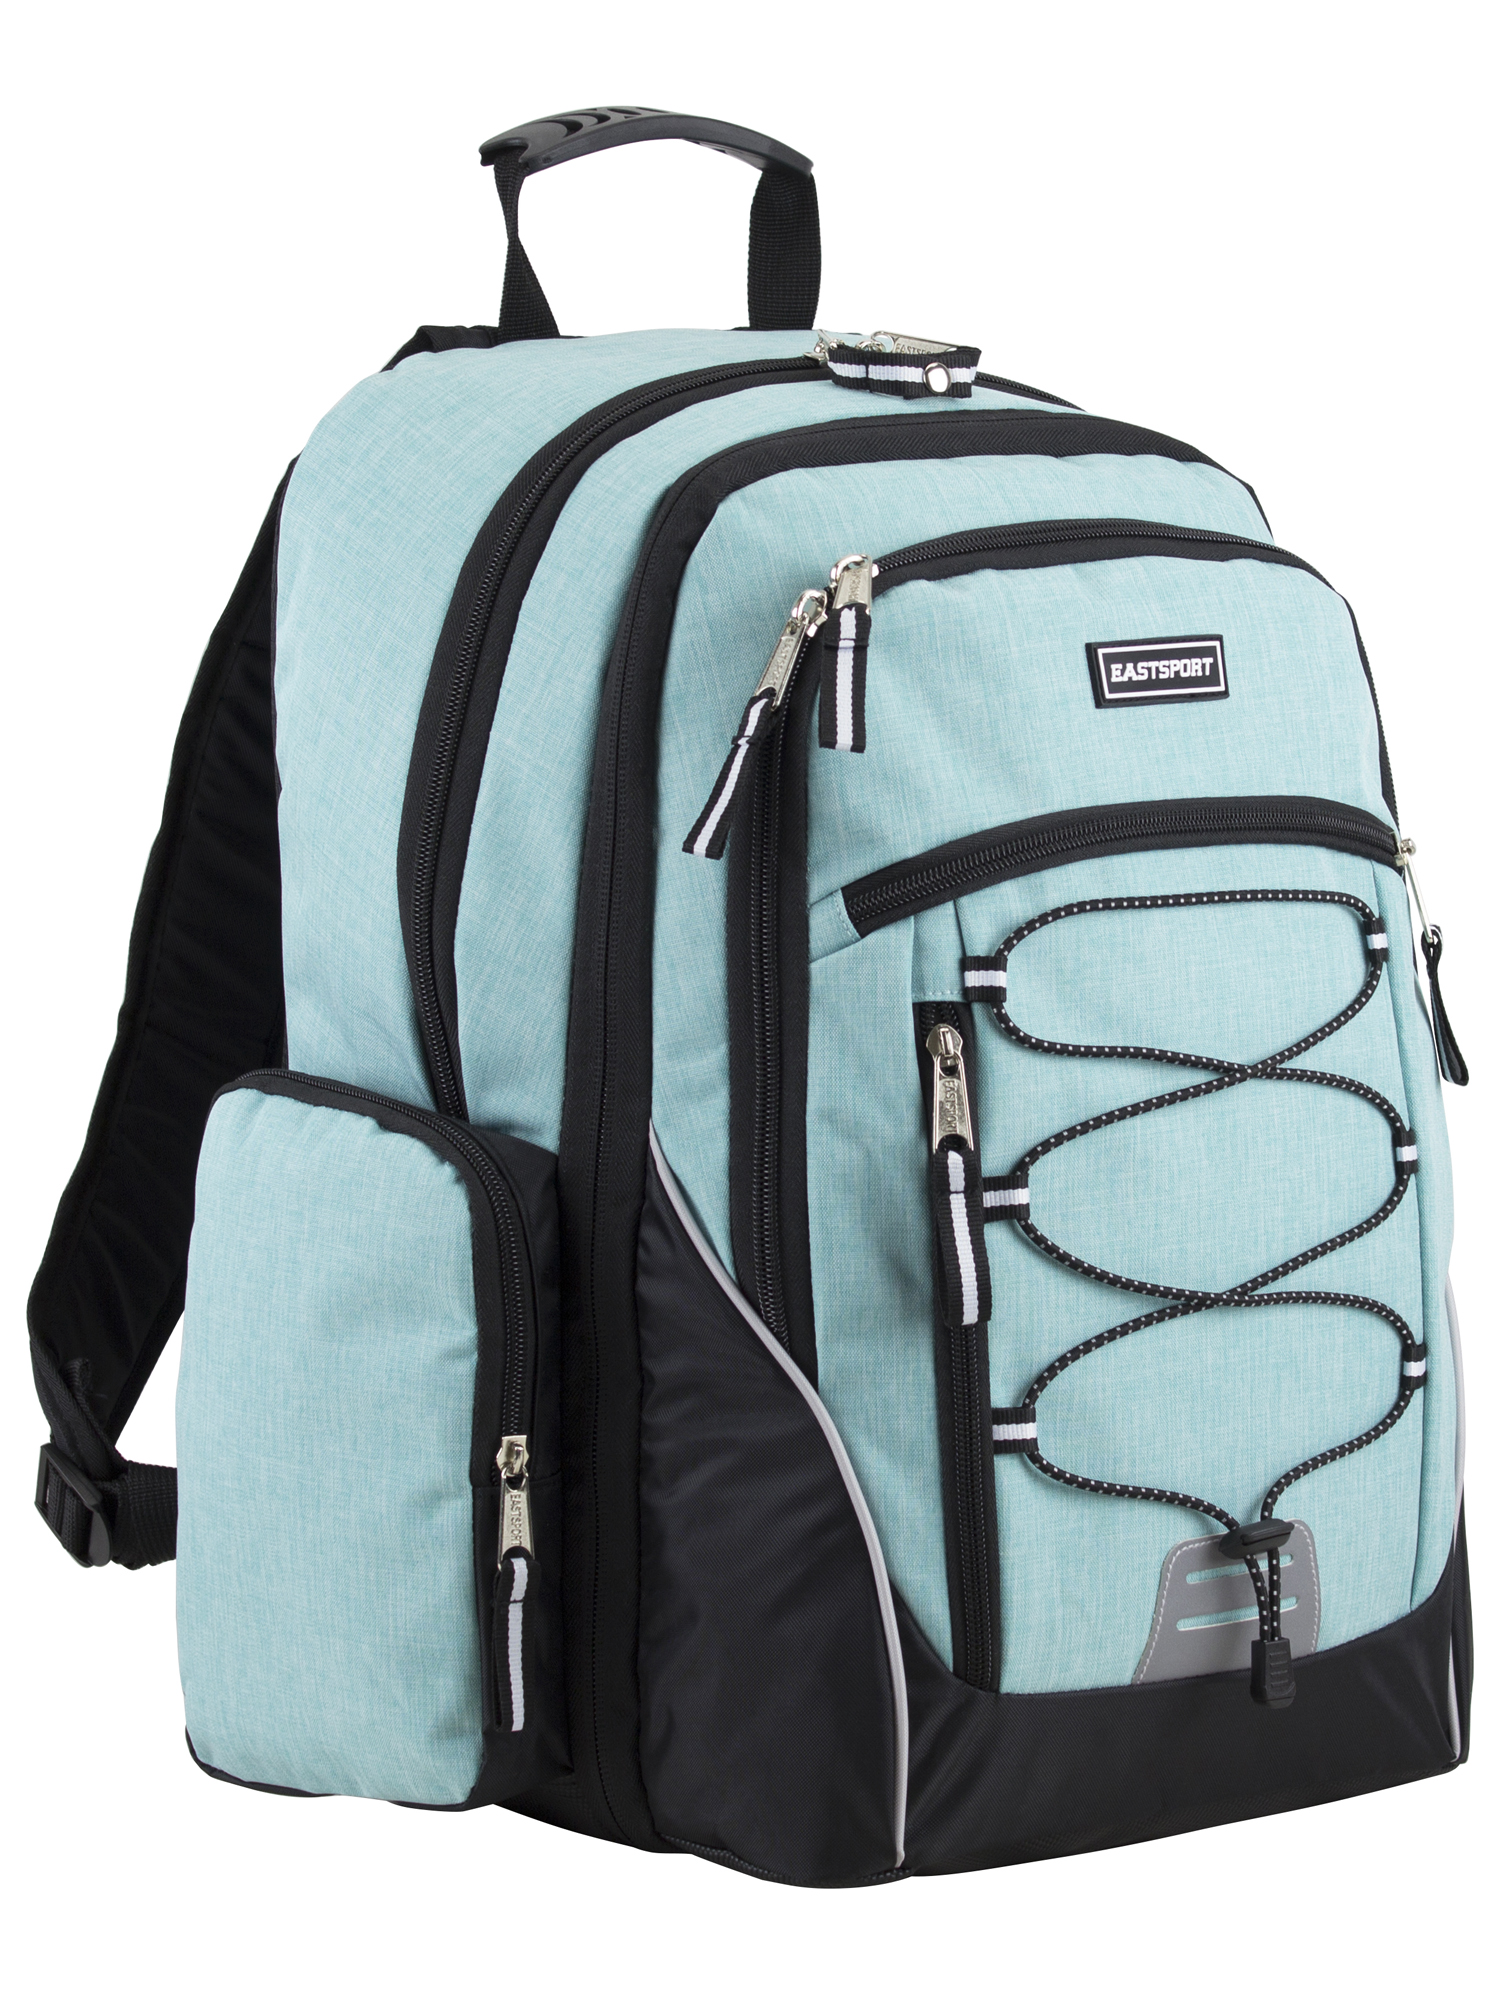 Eastsport Unisex Optimus Backpack, Mint - image 1 of 8